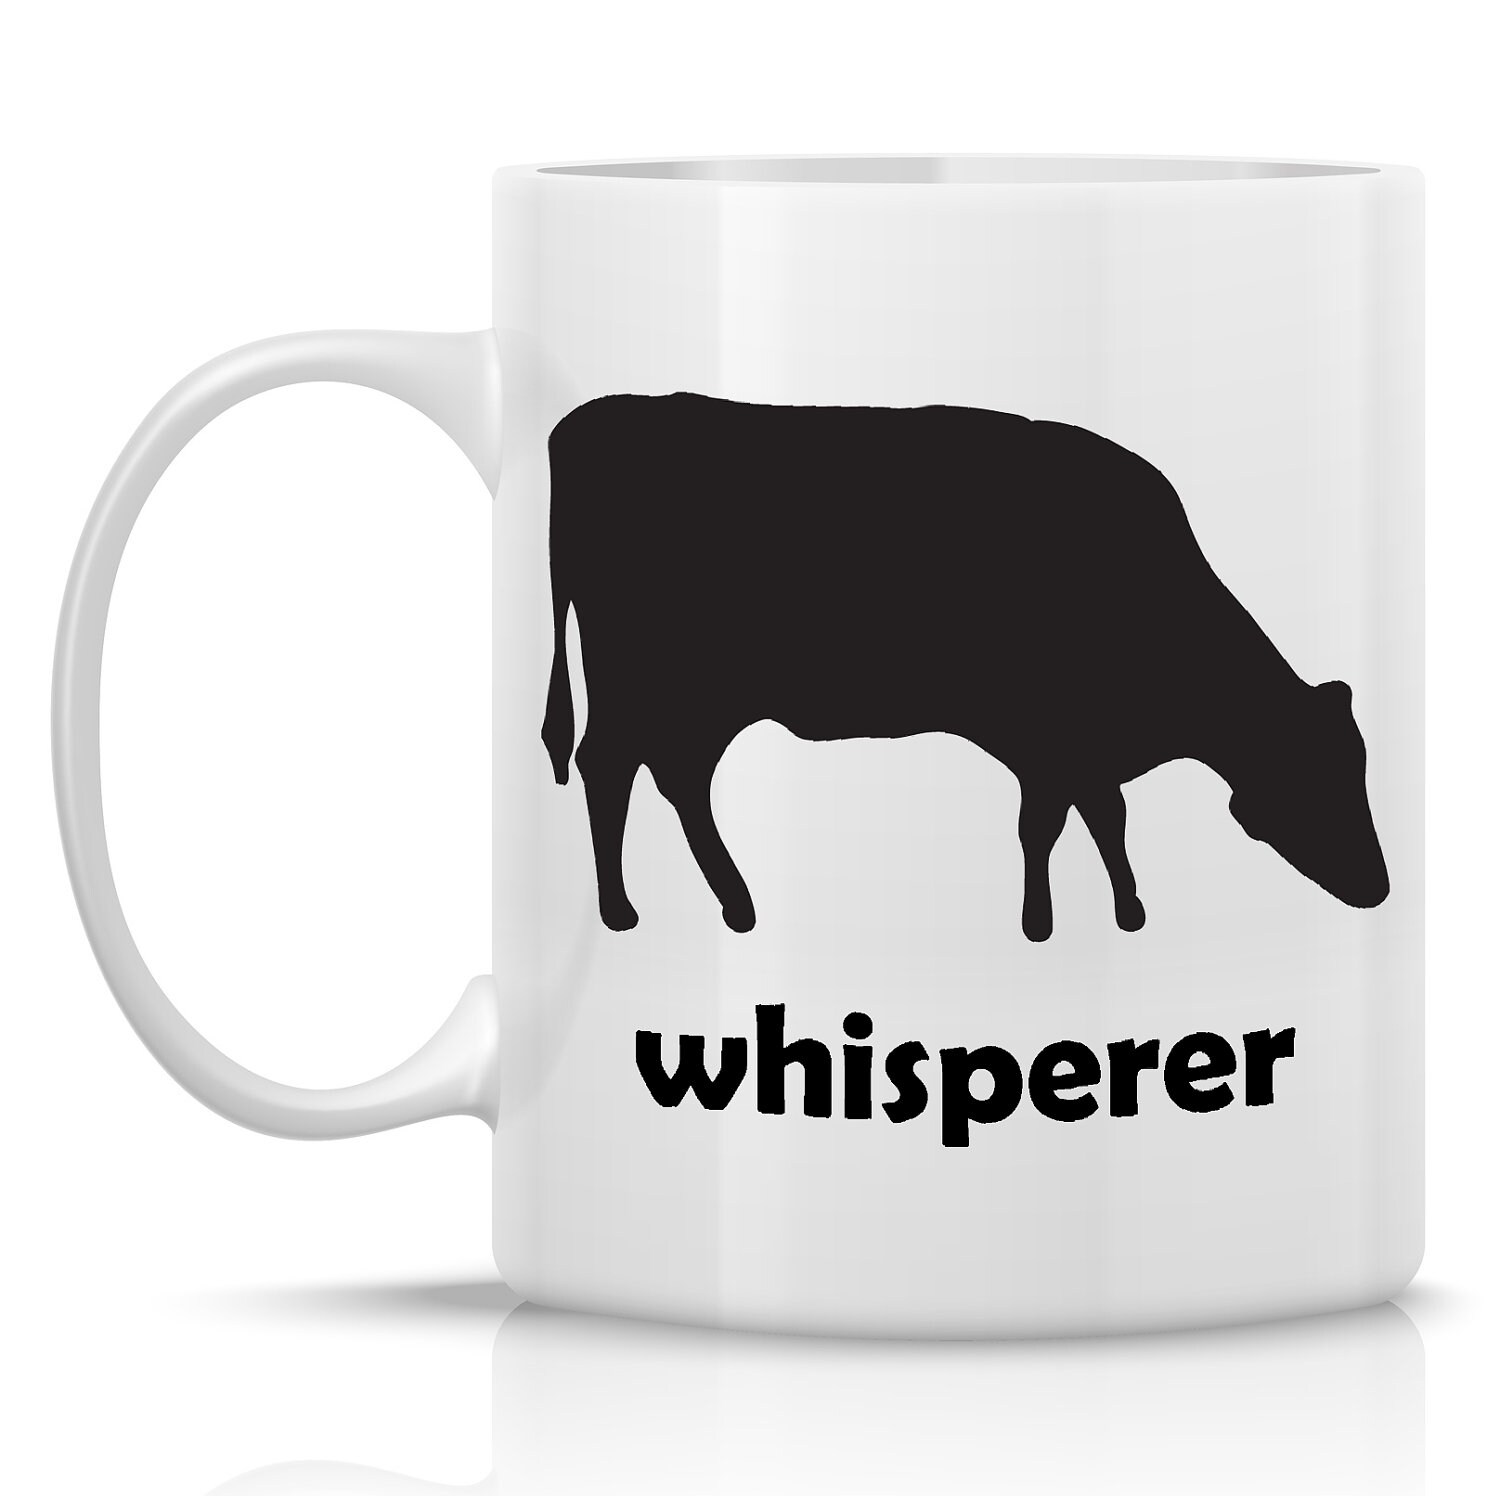 Homestead Cattle Coffee Mug - Steer Whisperer: 11-oz. Porcelain Mug - Farm Animal Theme with Steer - HomesteaderGifts